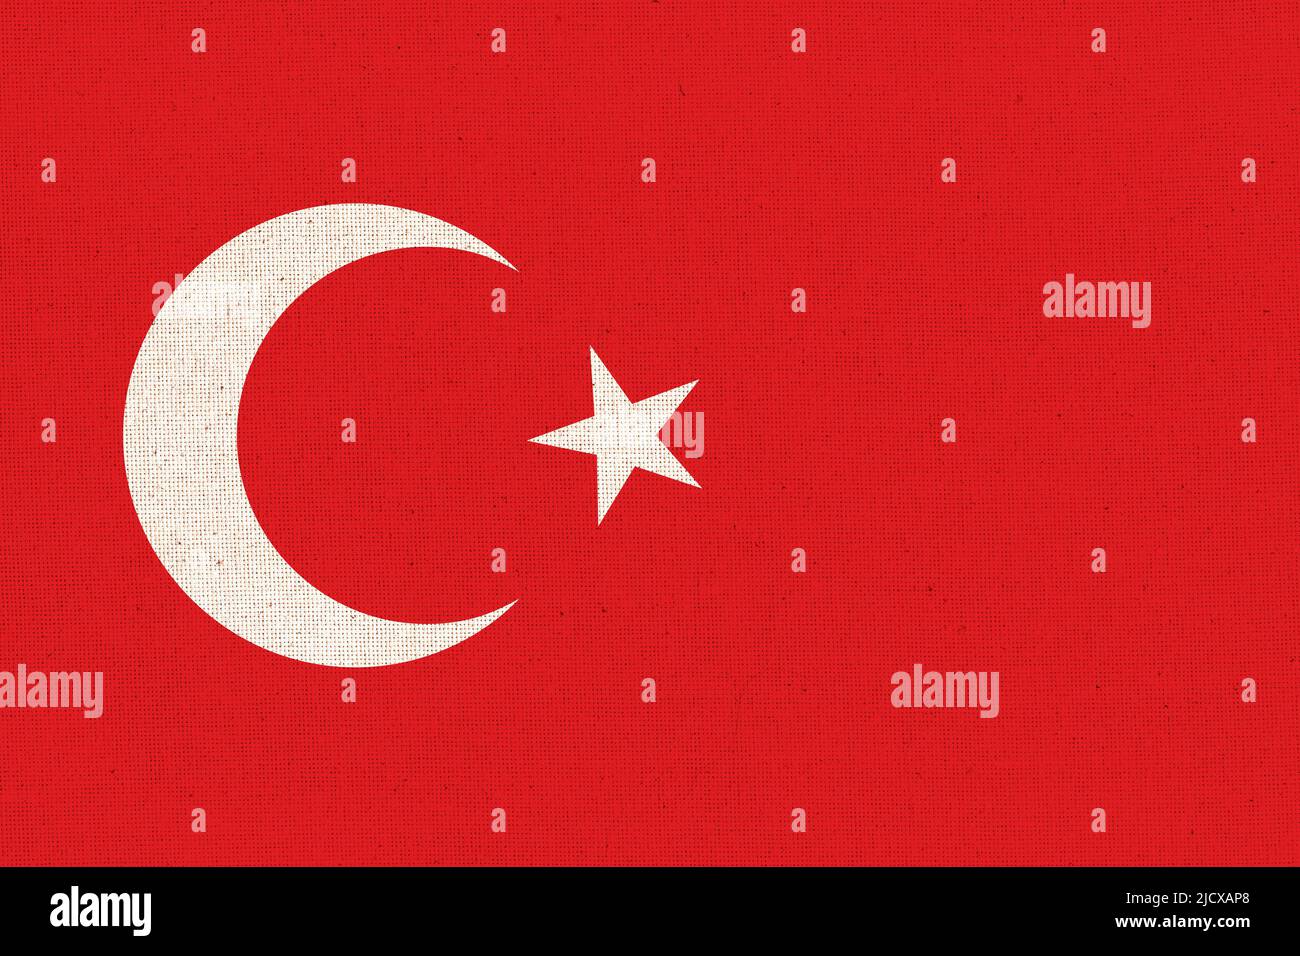 Flag of Turkey. Turkish flag on fabric surface. Fabric texture. National symbol of Turkey on patterned background. Republic of Turkey Stock Photo